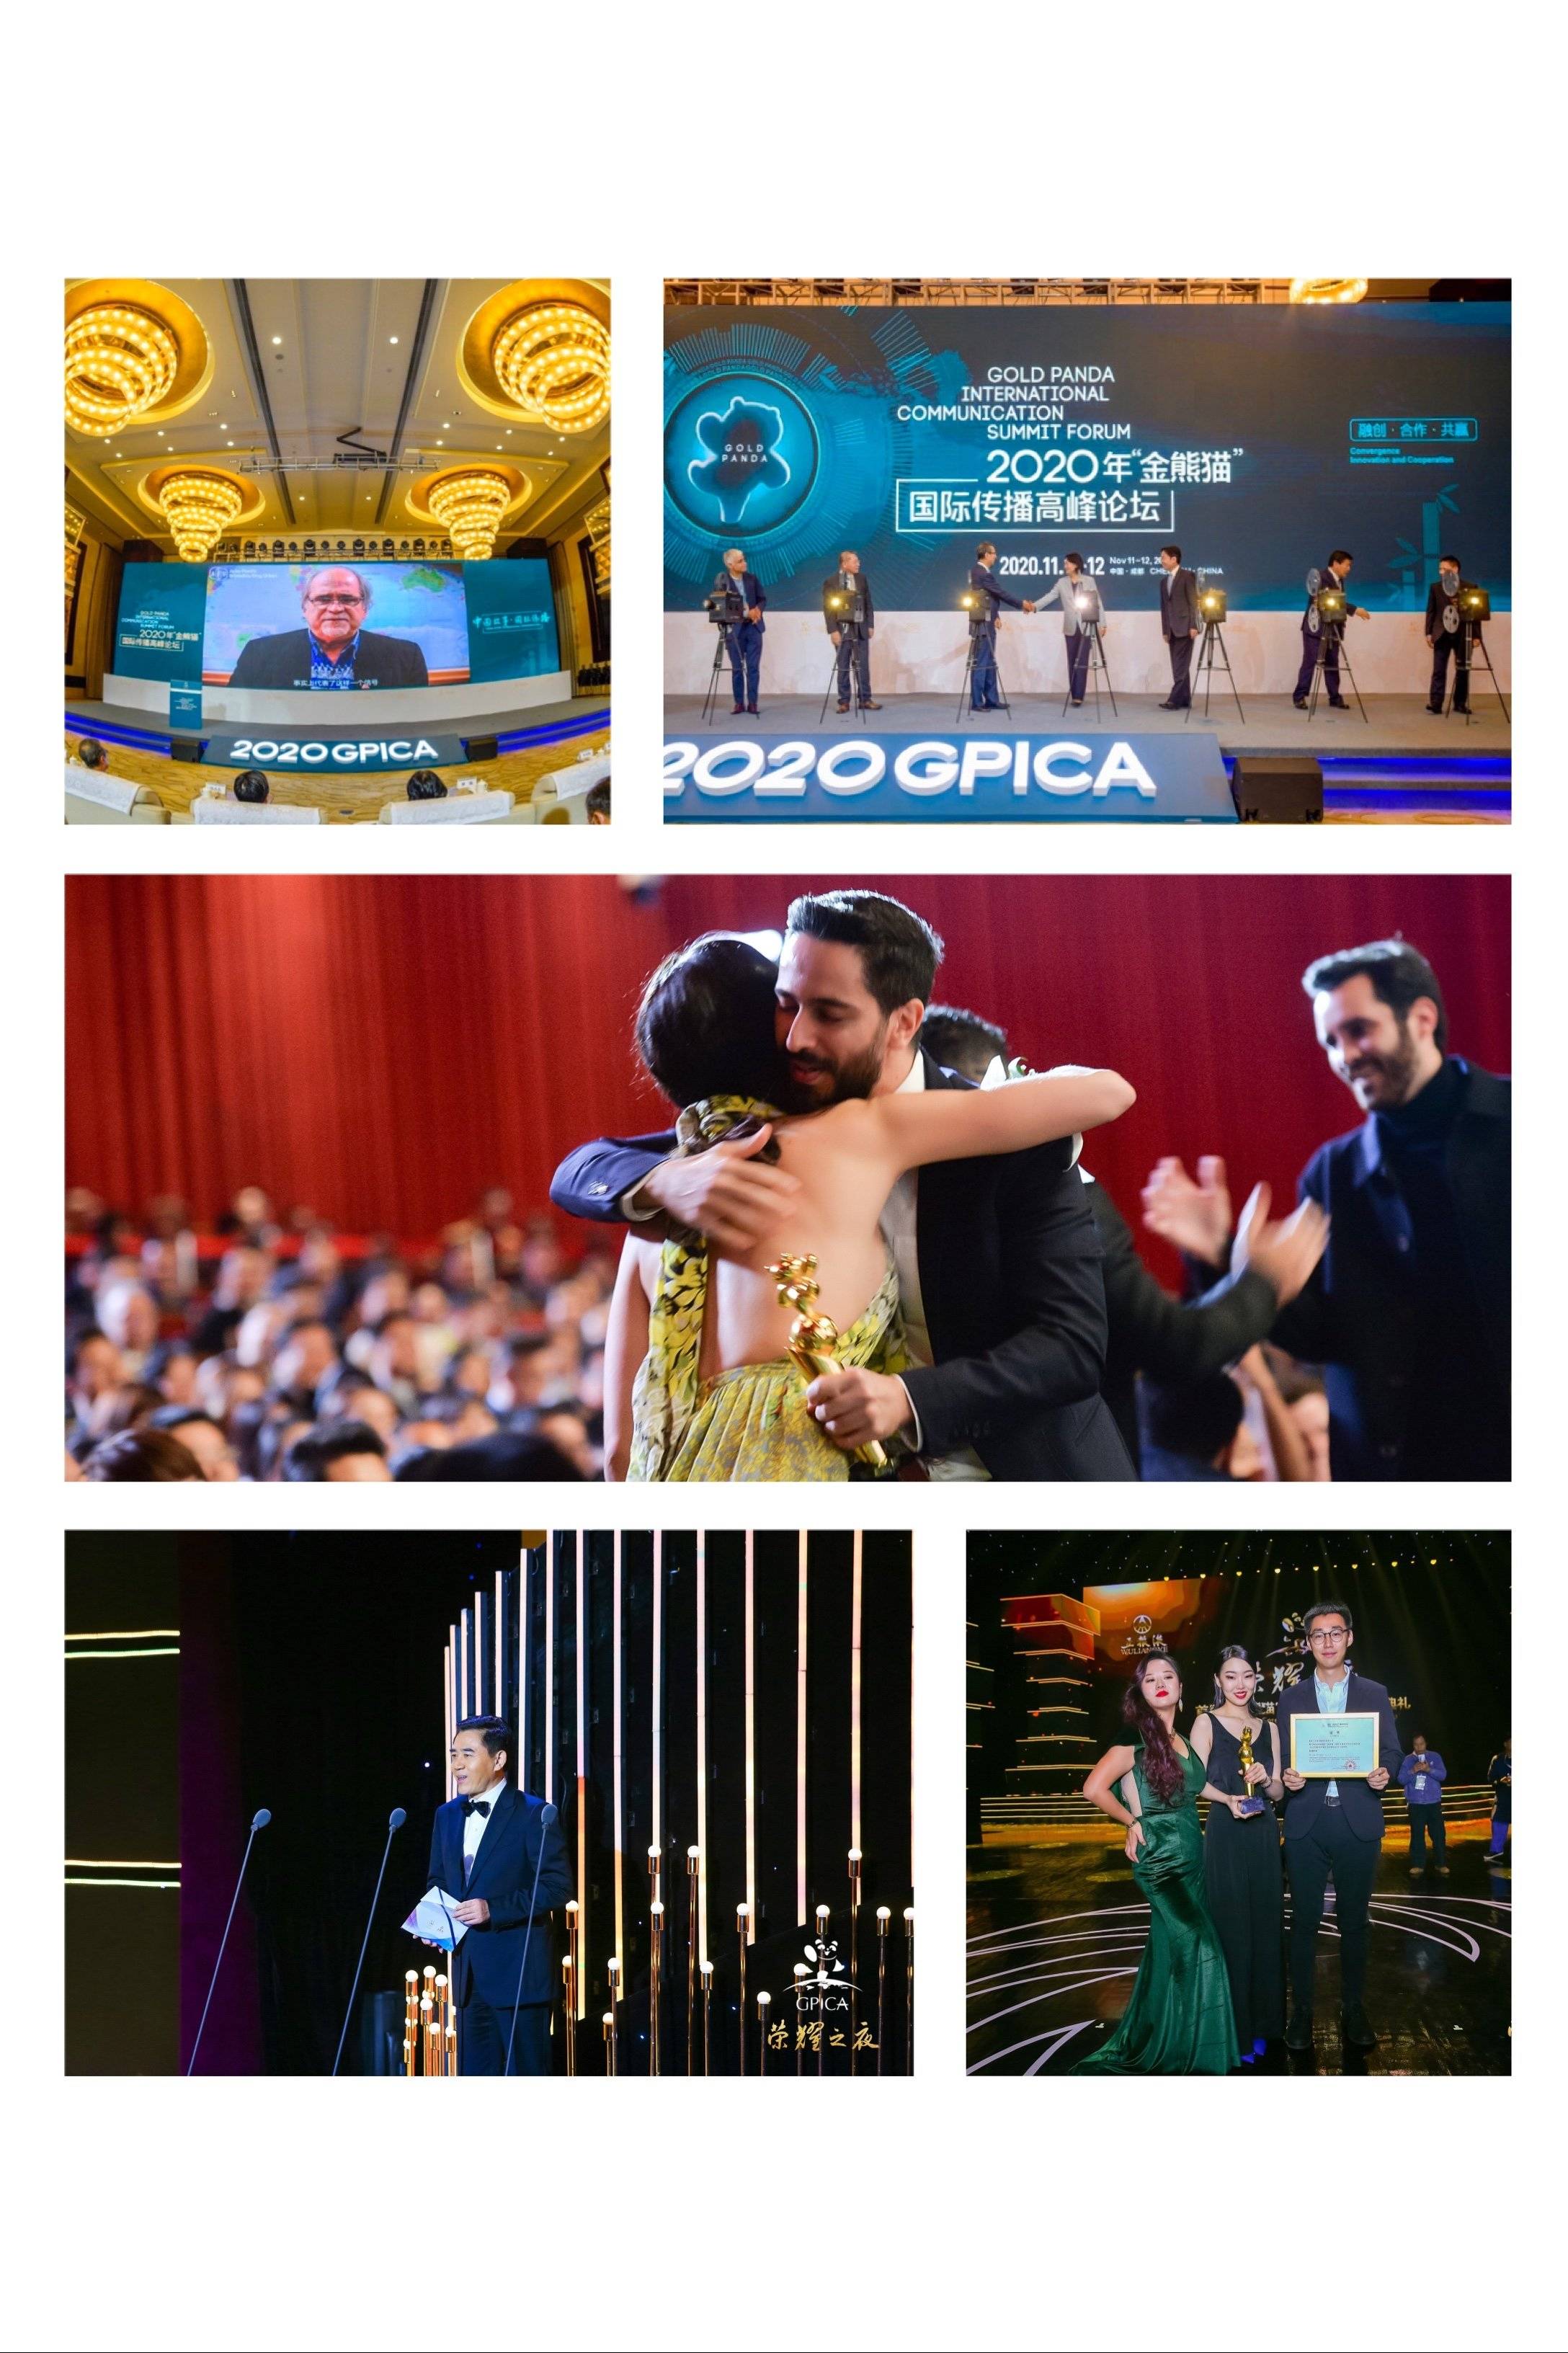 2021 Sichuan TV Festival and “Gold Panda” Awards